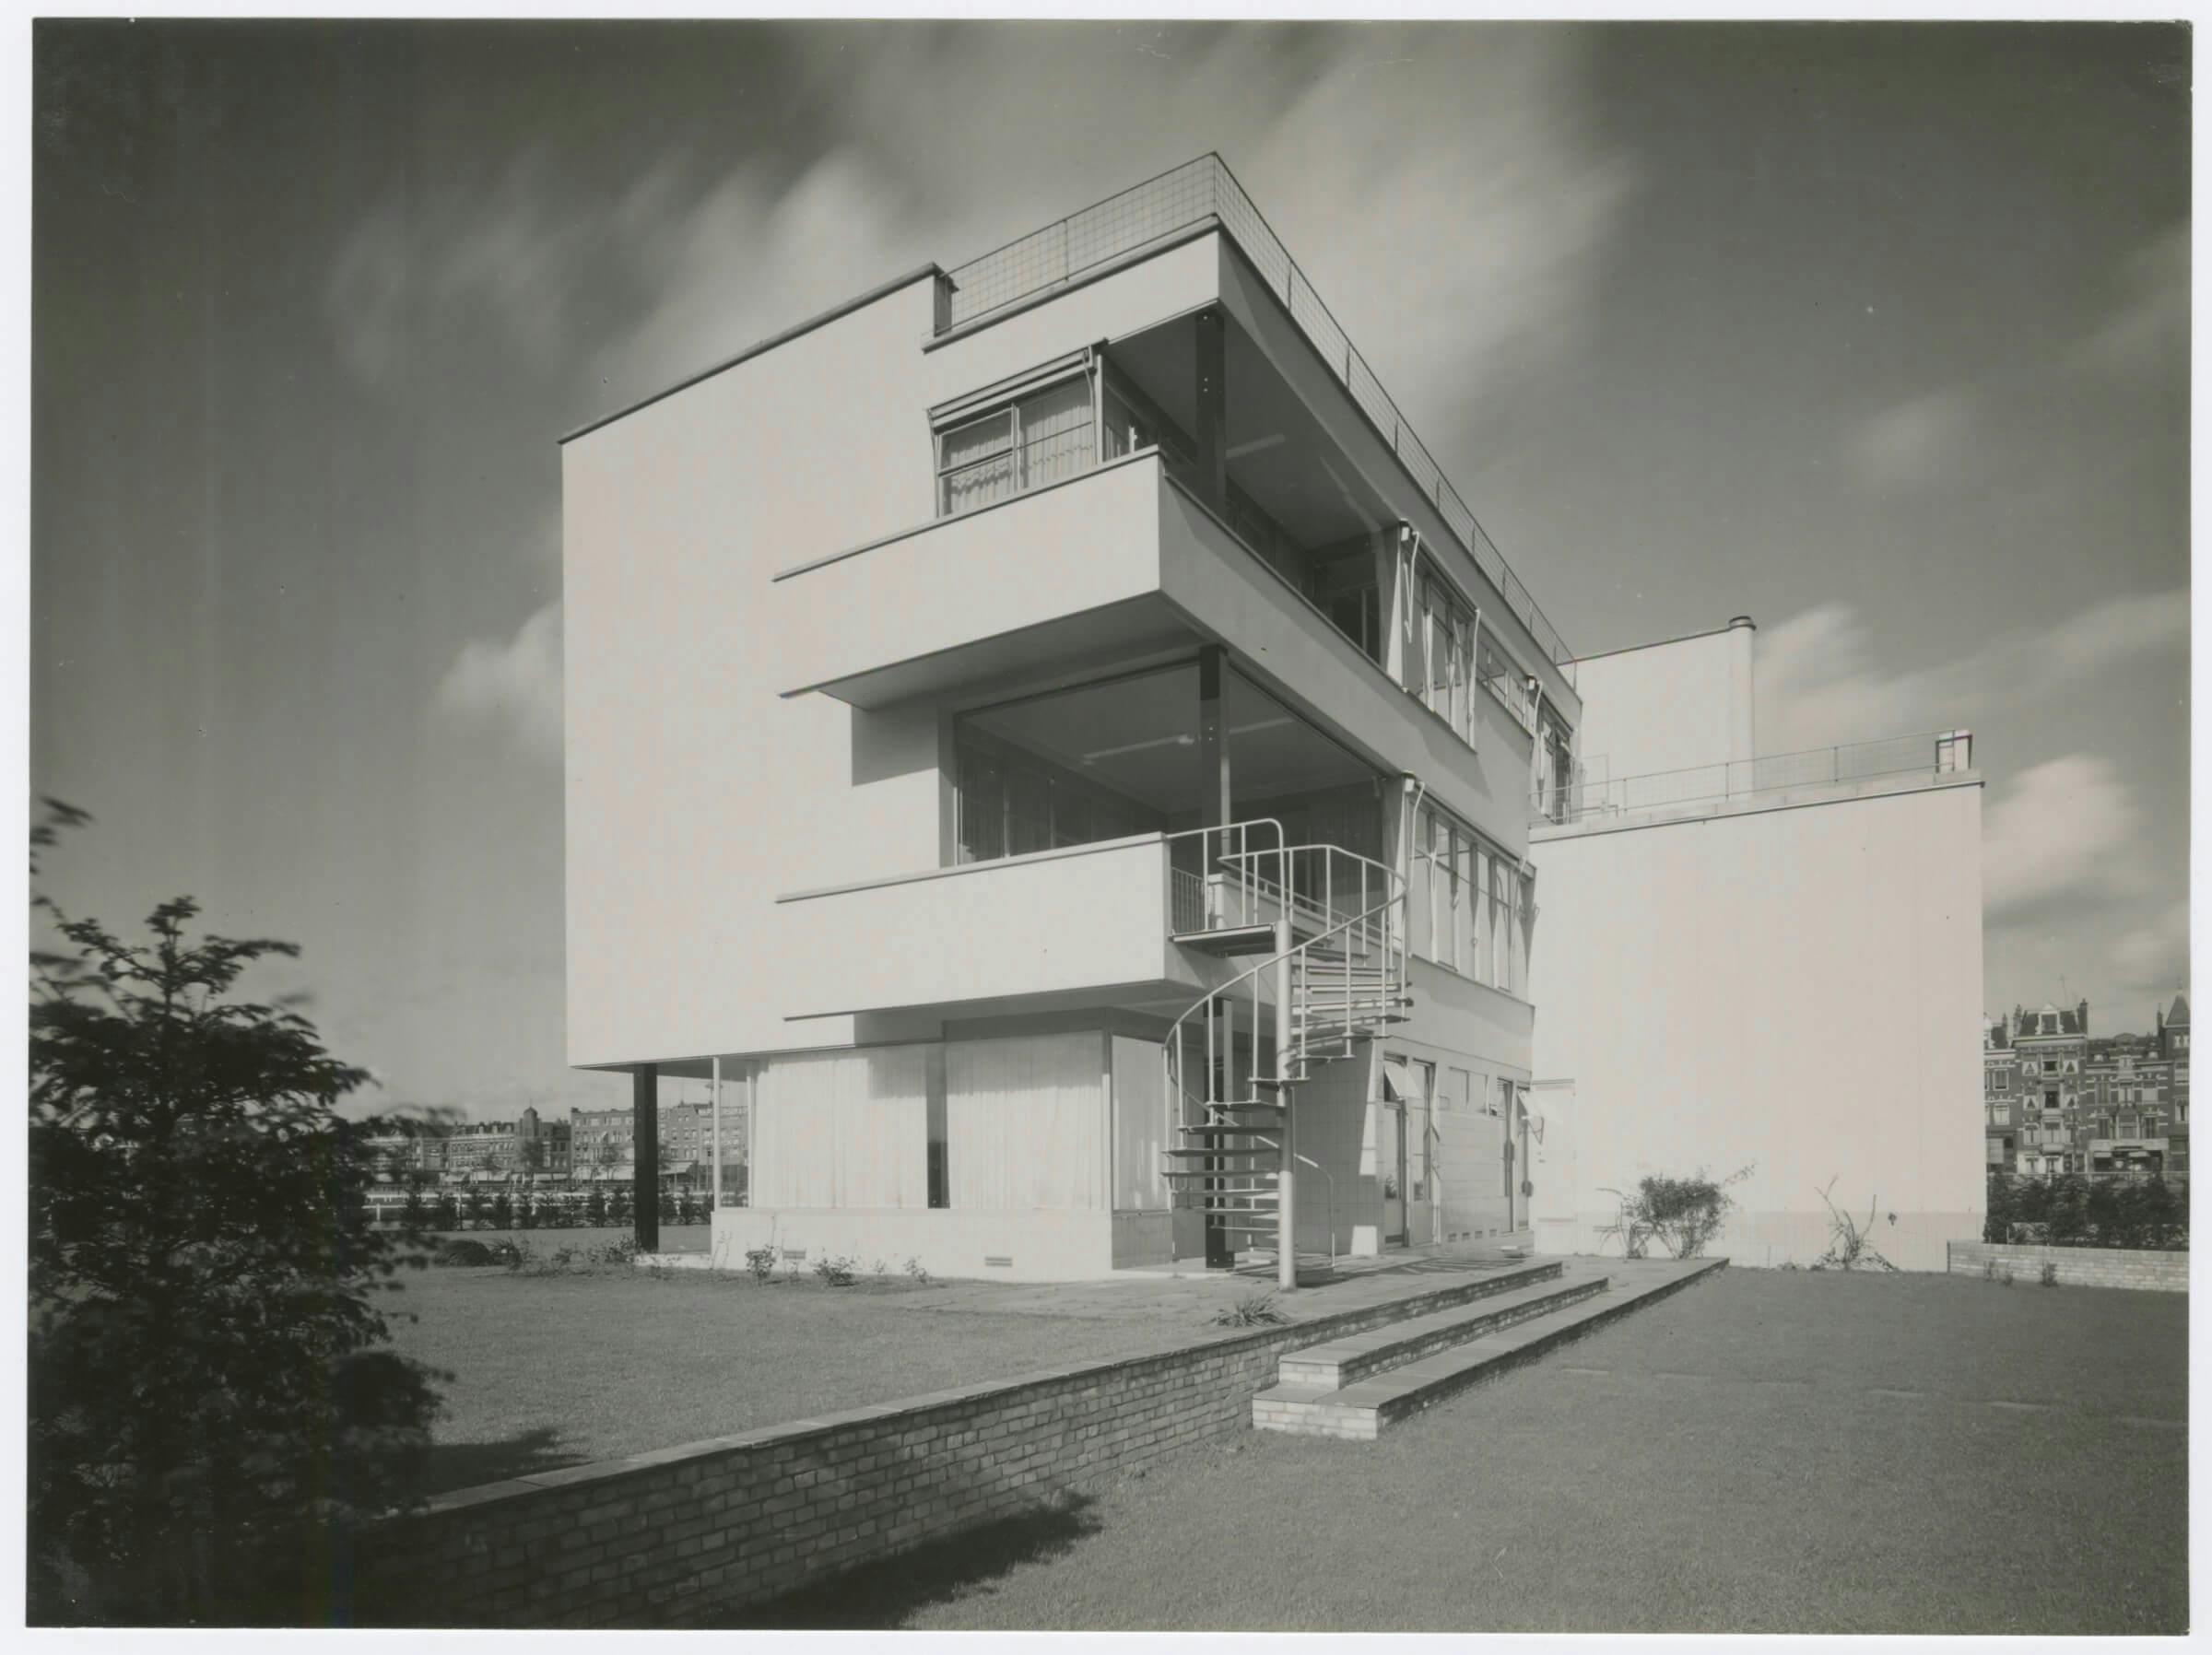 Sonneveld House photographed shortly after completion by J. Kamman, c. 1933. Nieuwe Instituut collection, SONN 34-3. © Nederlands Fotomuseum